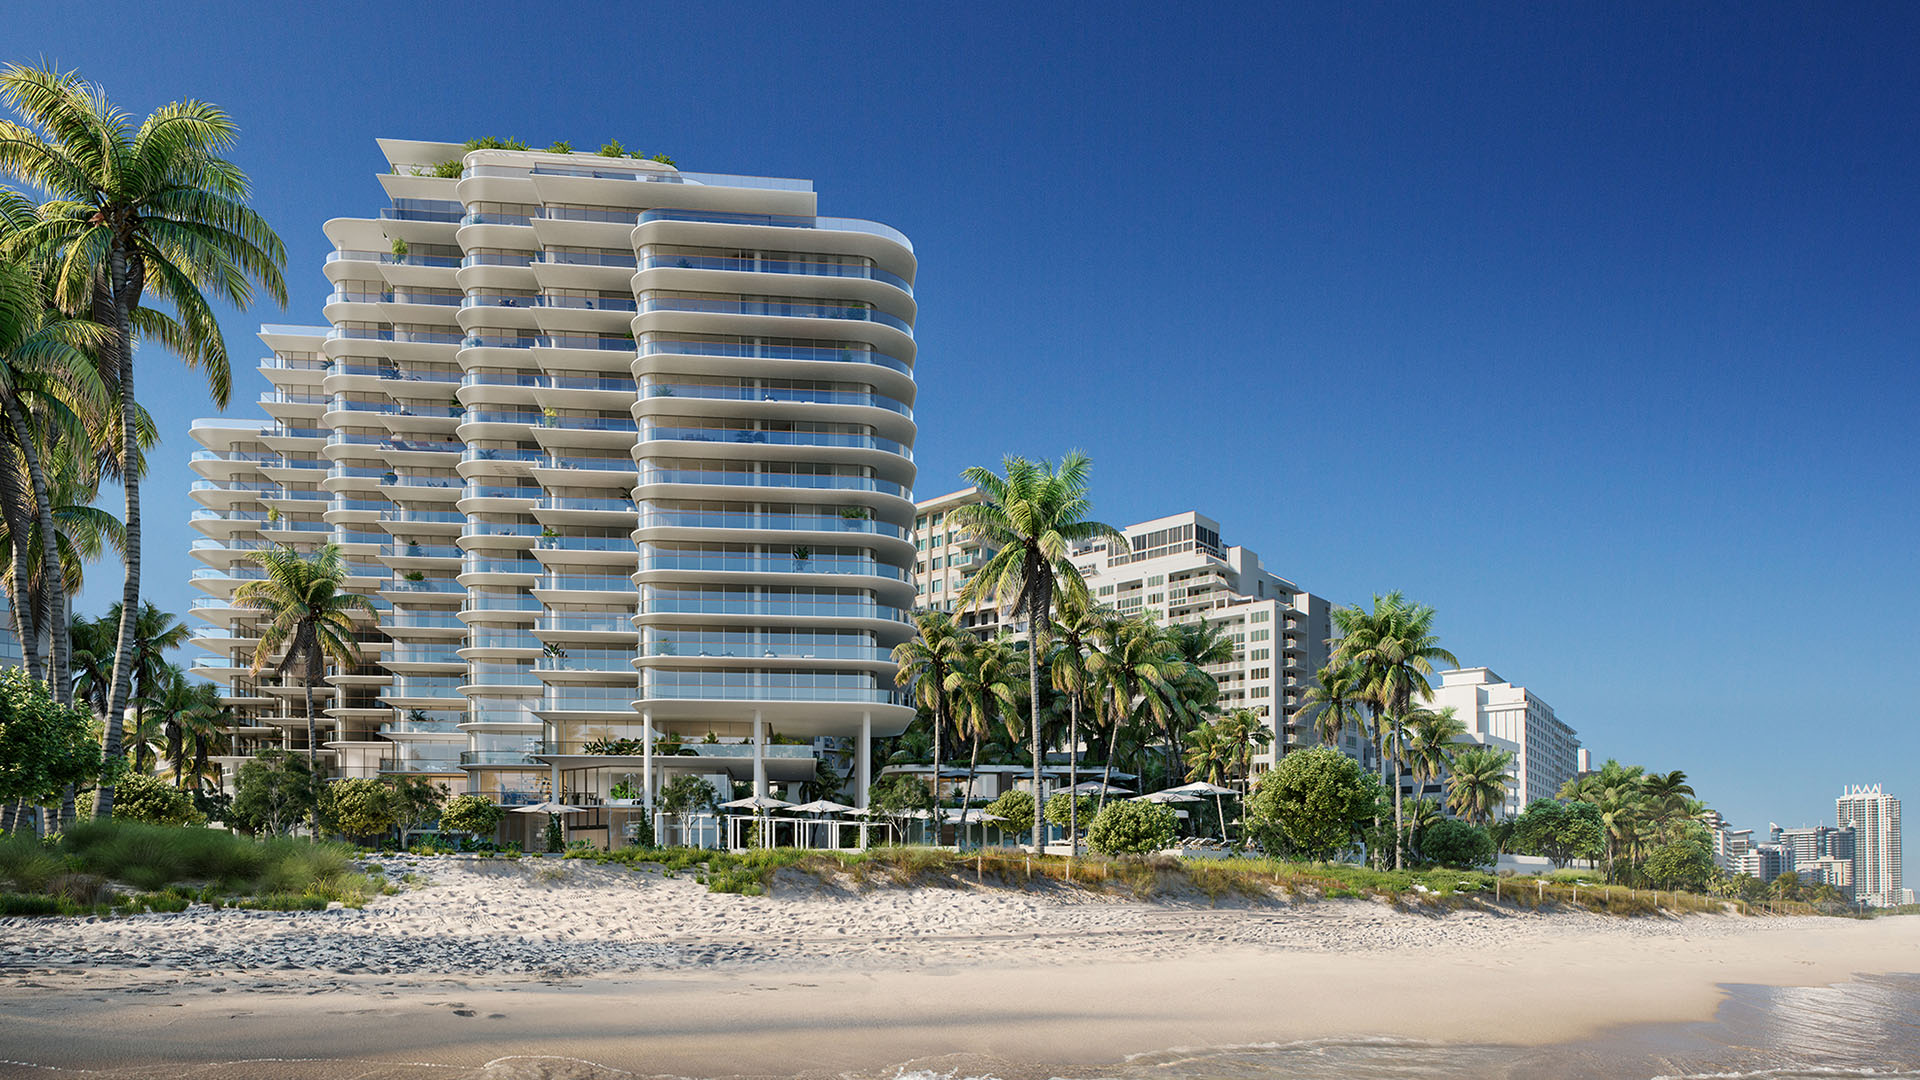 New Renderings Revealed for The Perigon Miami Beach